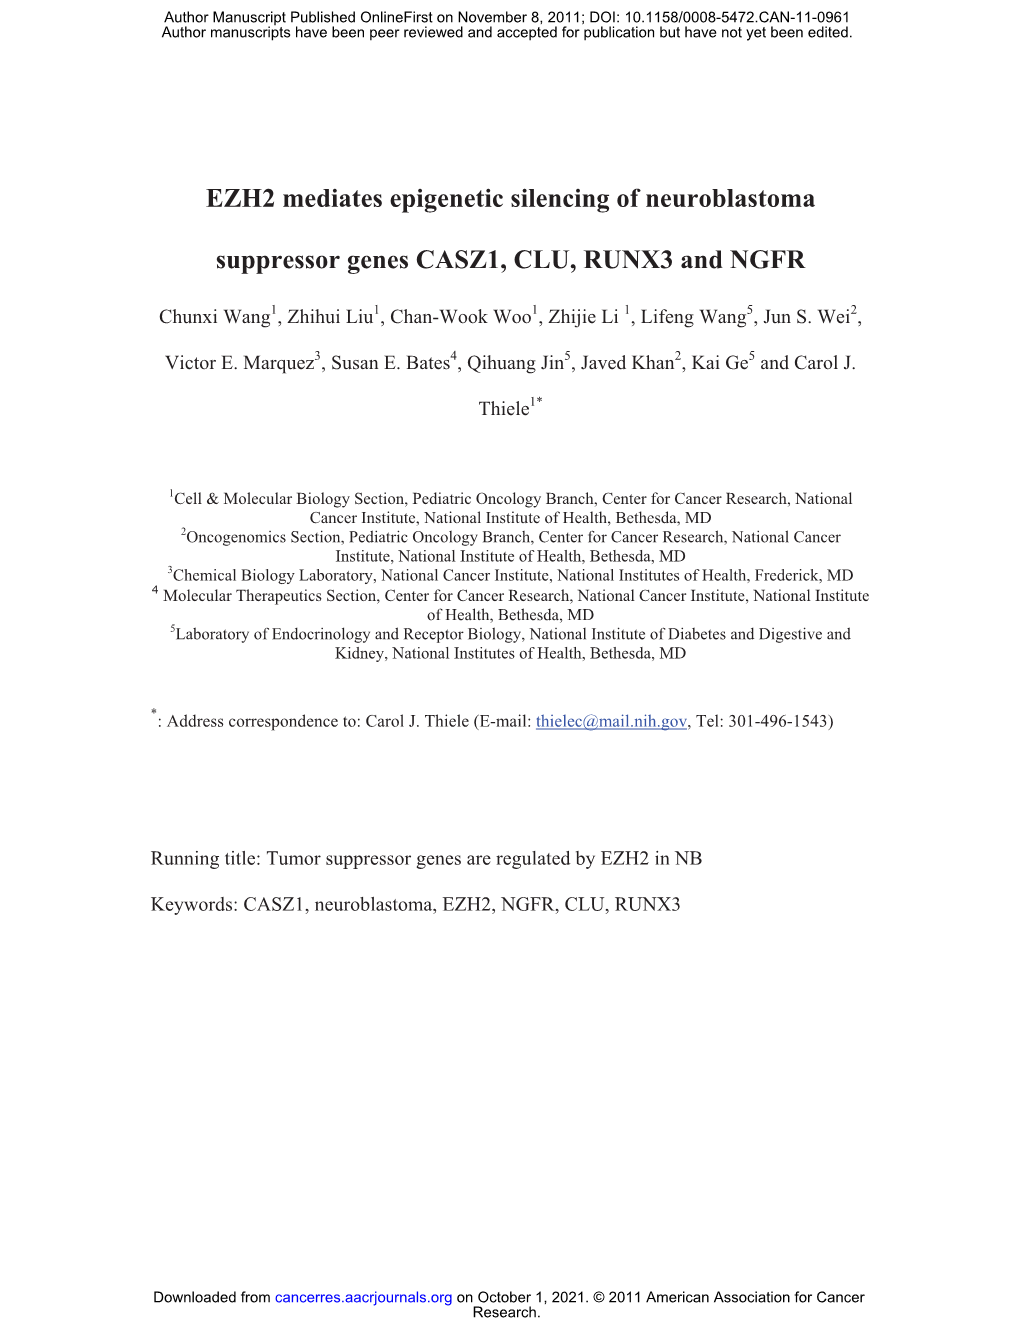 EZH2 Mediates Epigenetic Silencing of Neuroblastoma